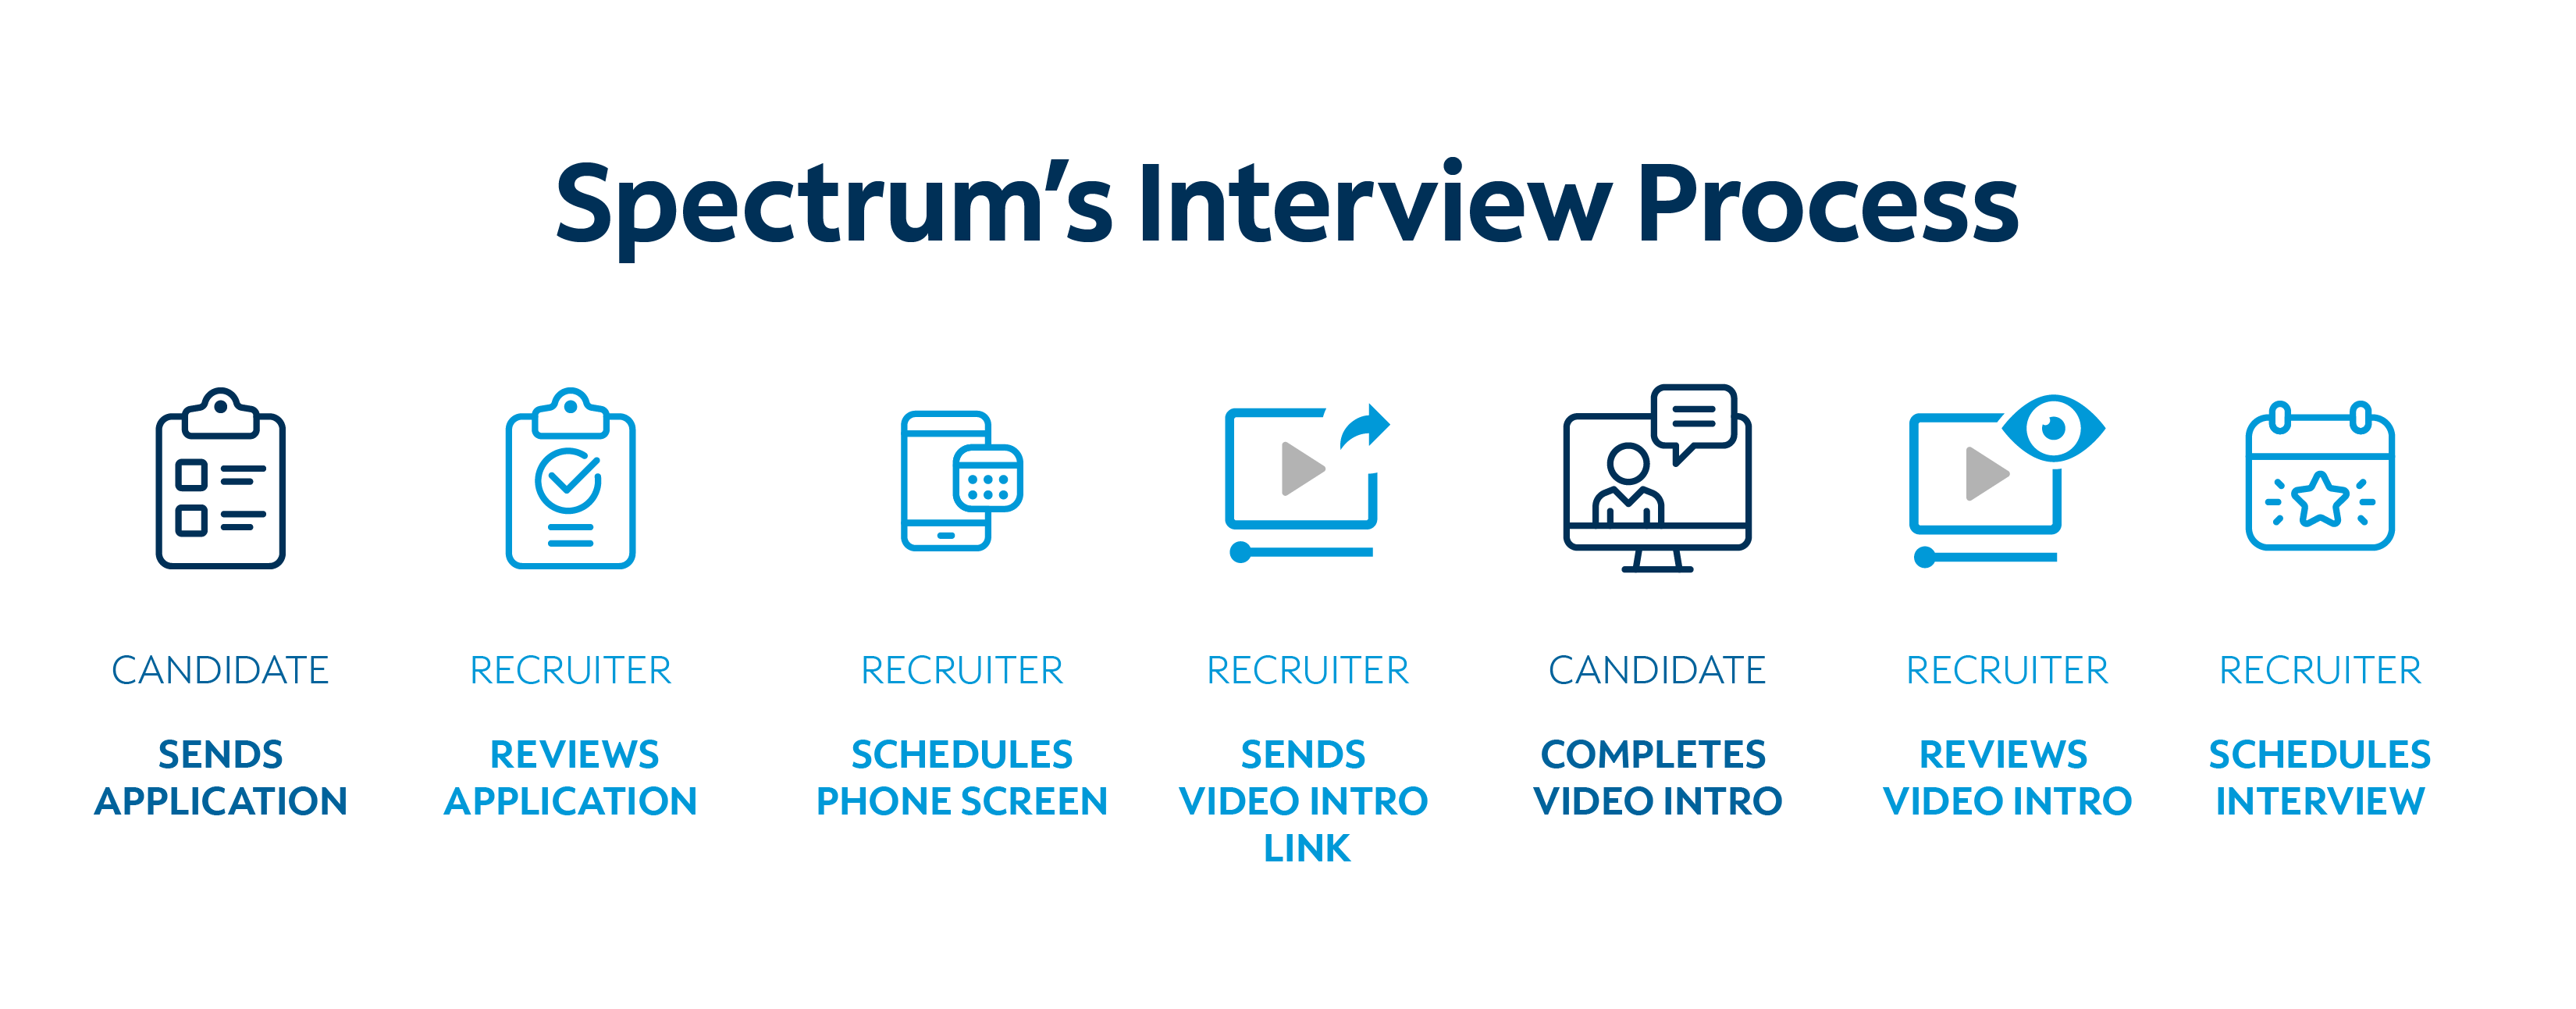 Spectrum's Interview Process